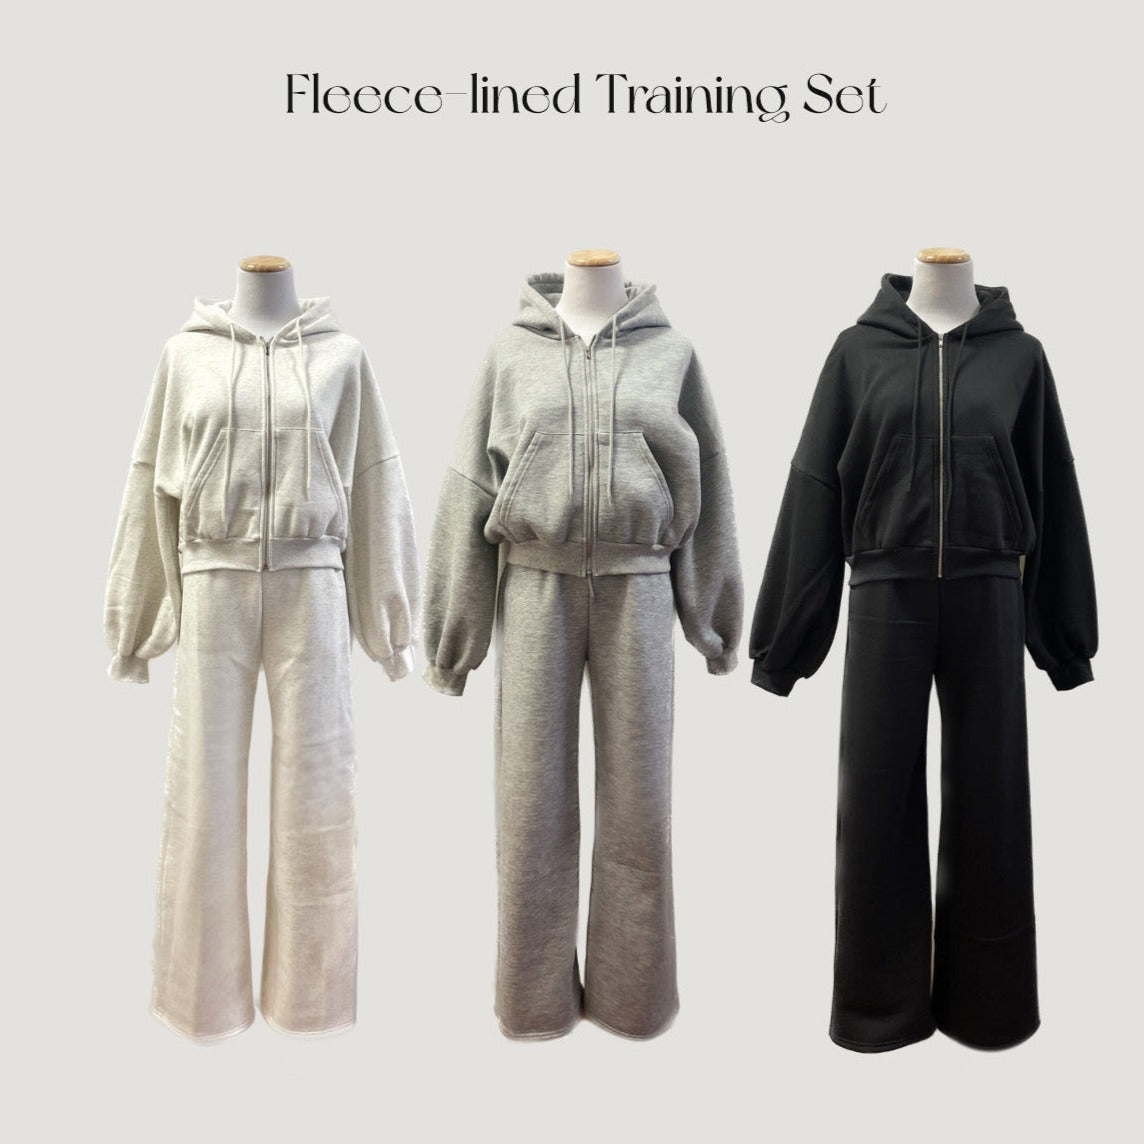 Fleece-lined Training Set